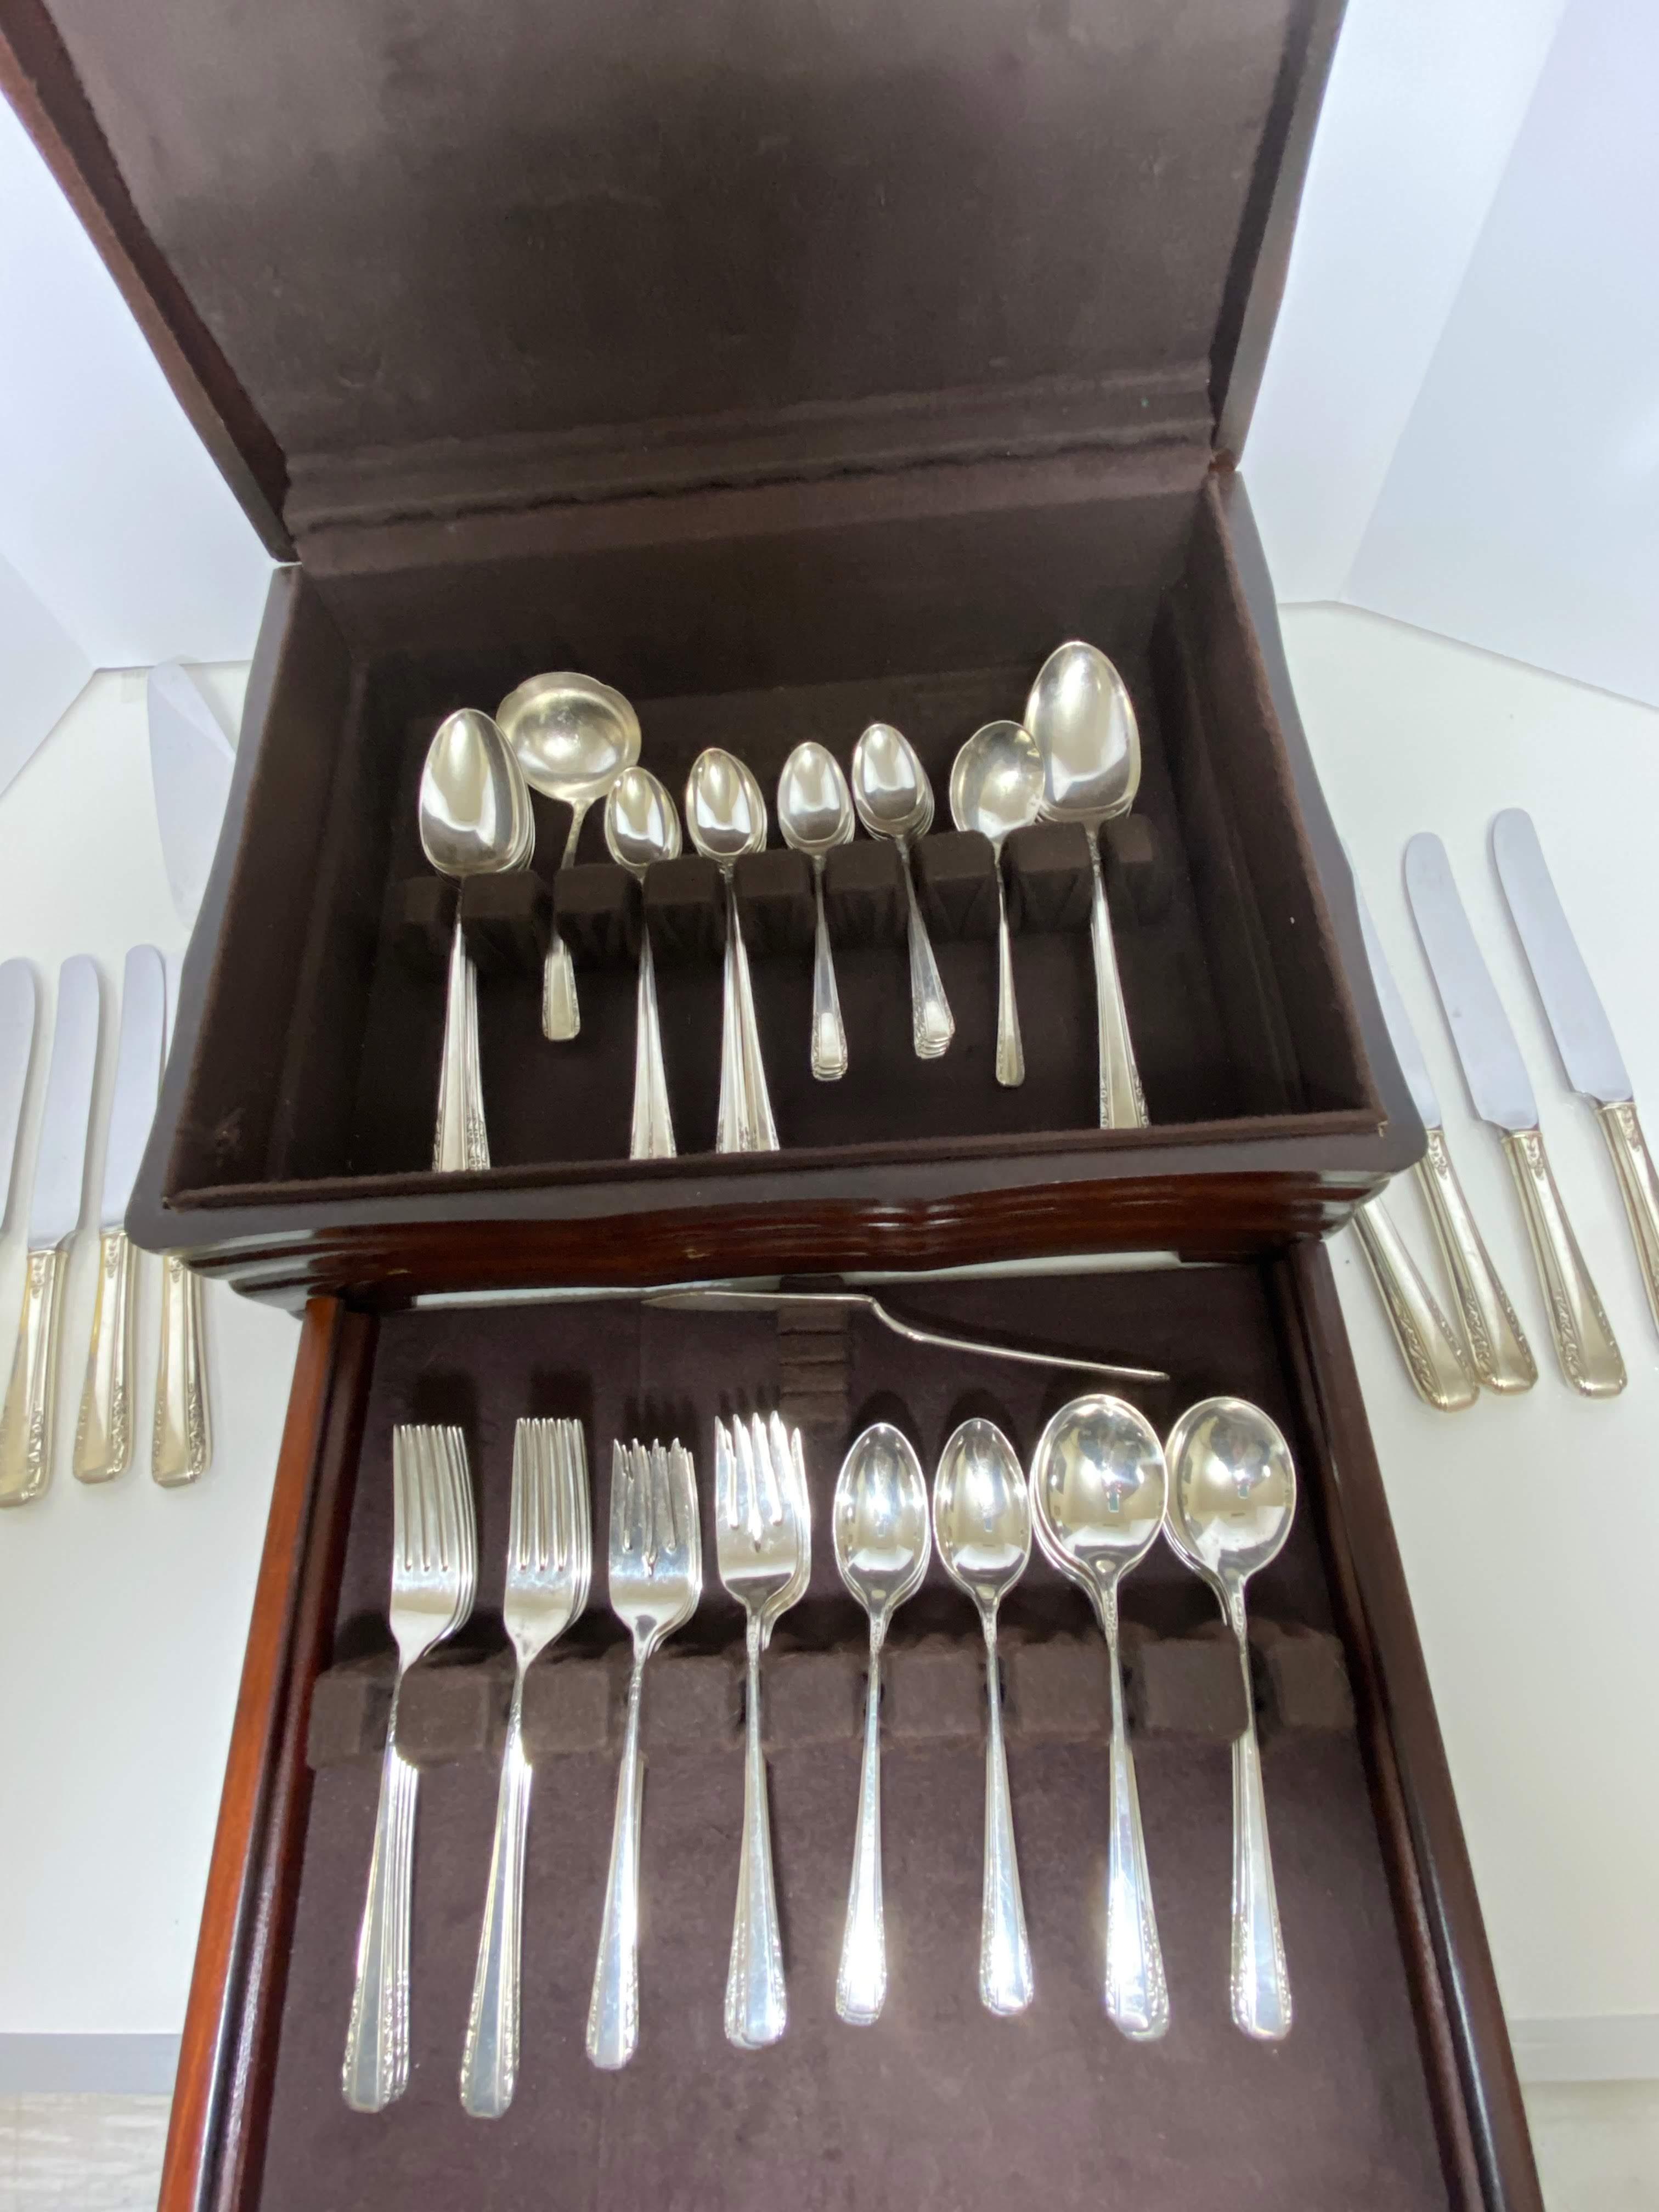 67 Pc Sterling Silver Flatware Set by International Silver (Courtship) Pattern in Wooden Case